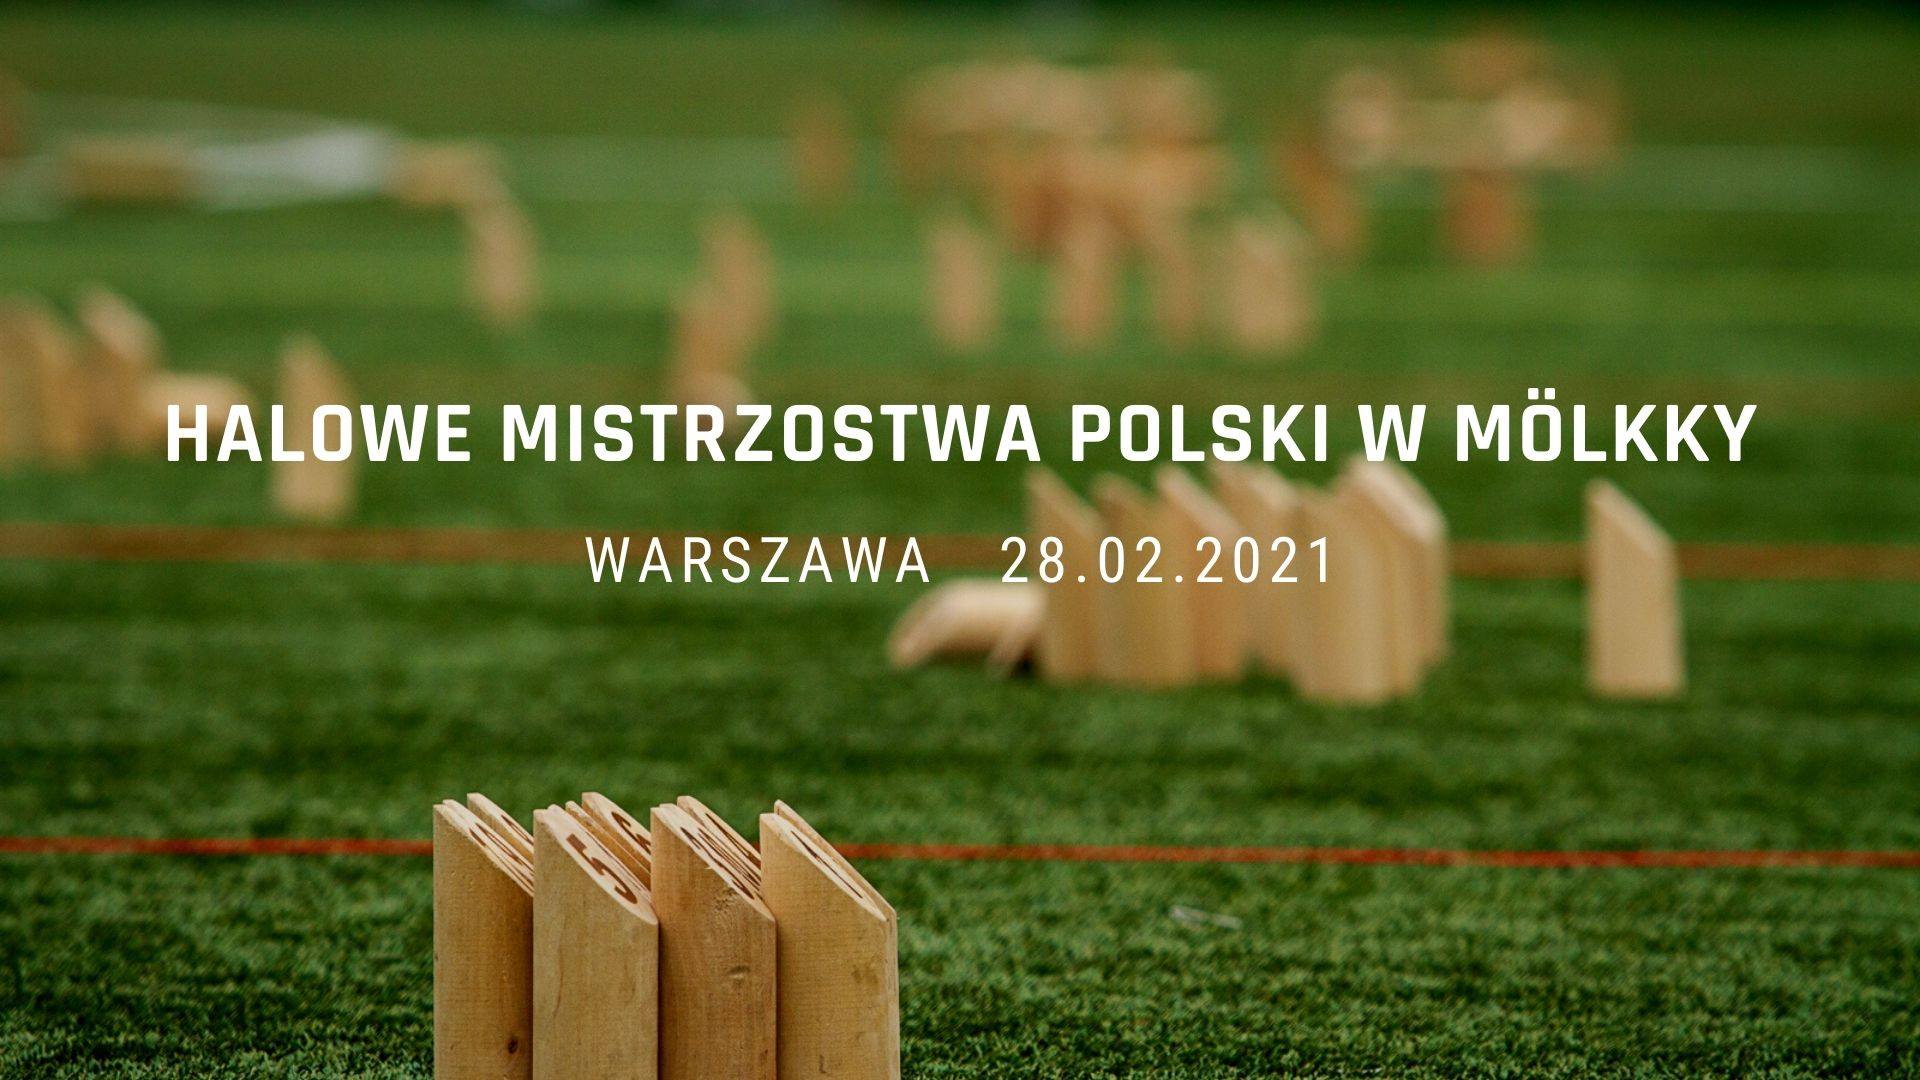 Polish Indoor Mölkky Championship